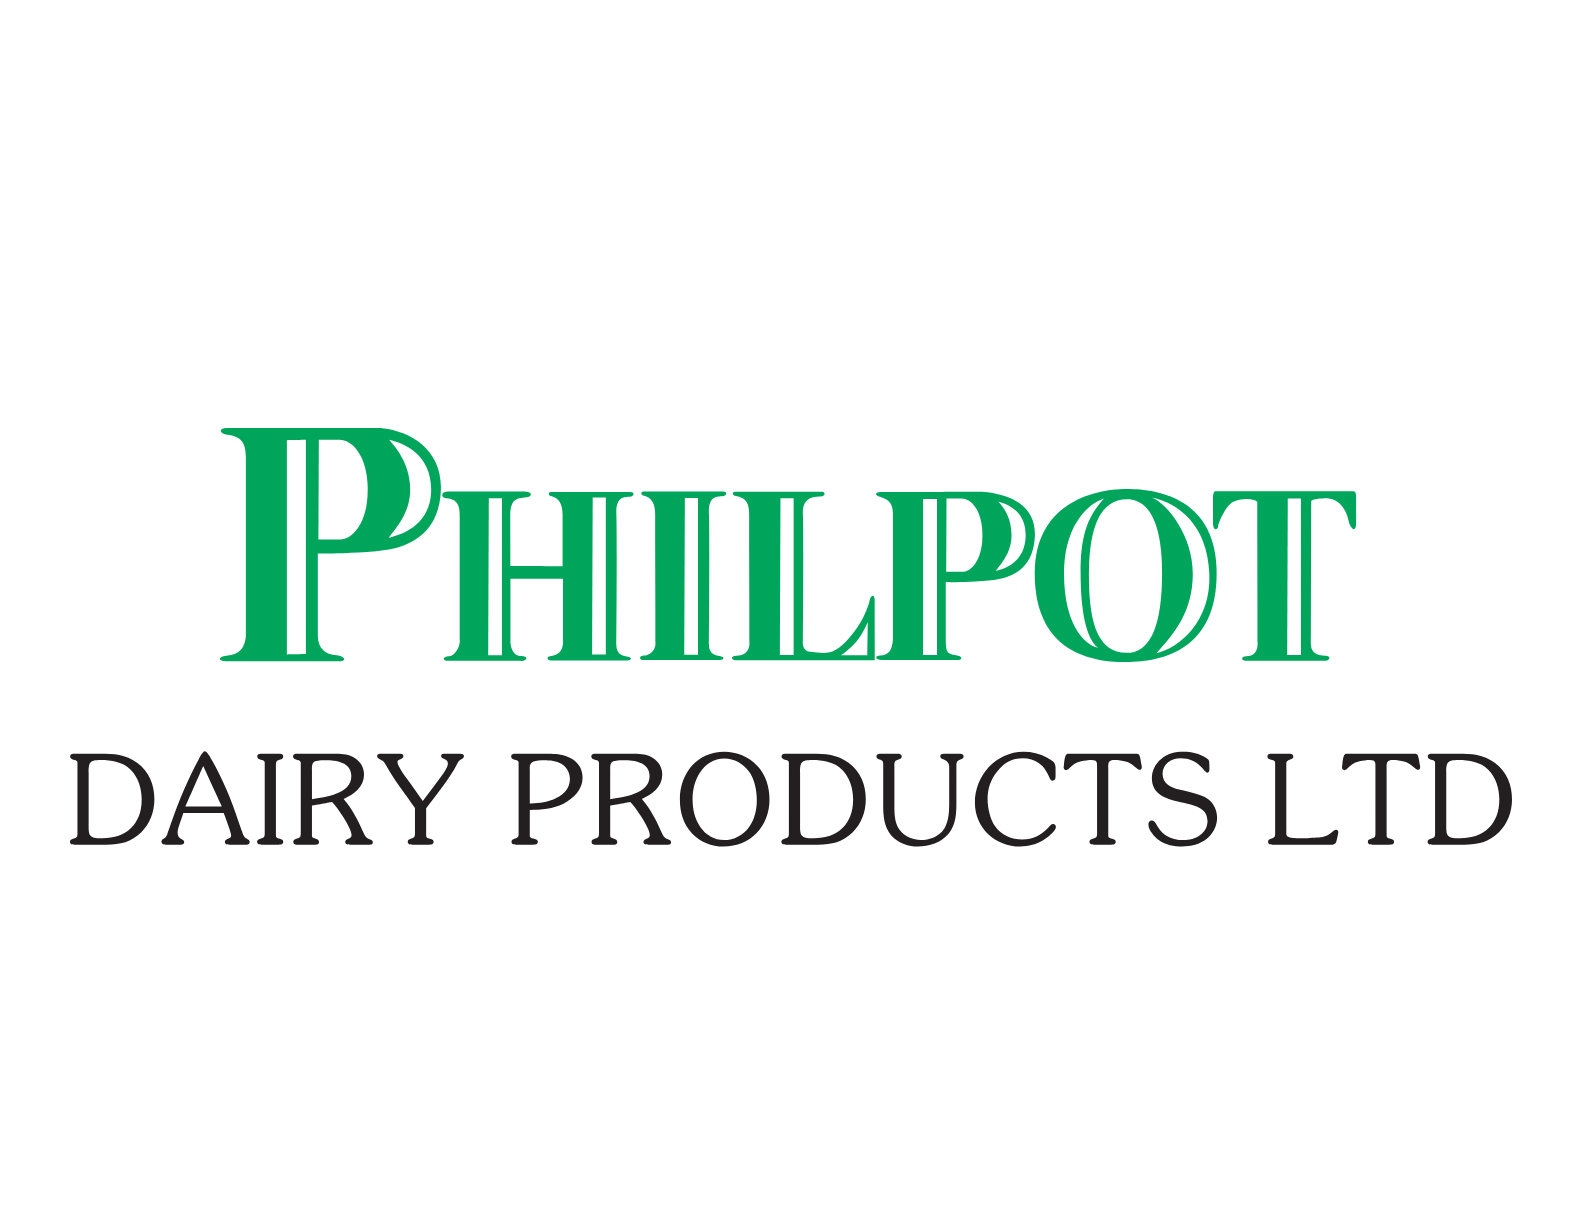 Philpot Dairy Products Ltd.